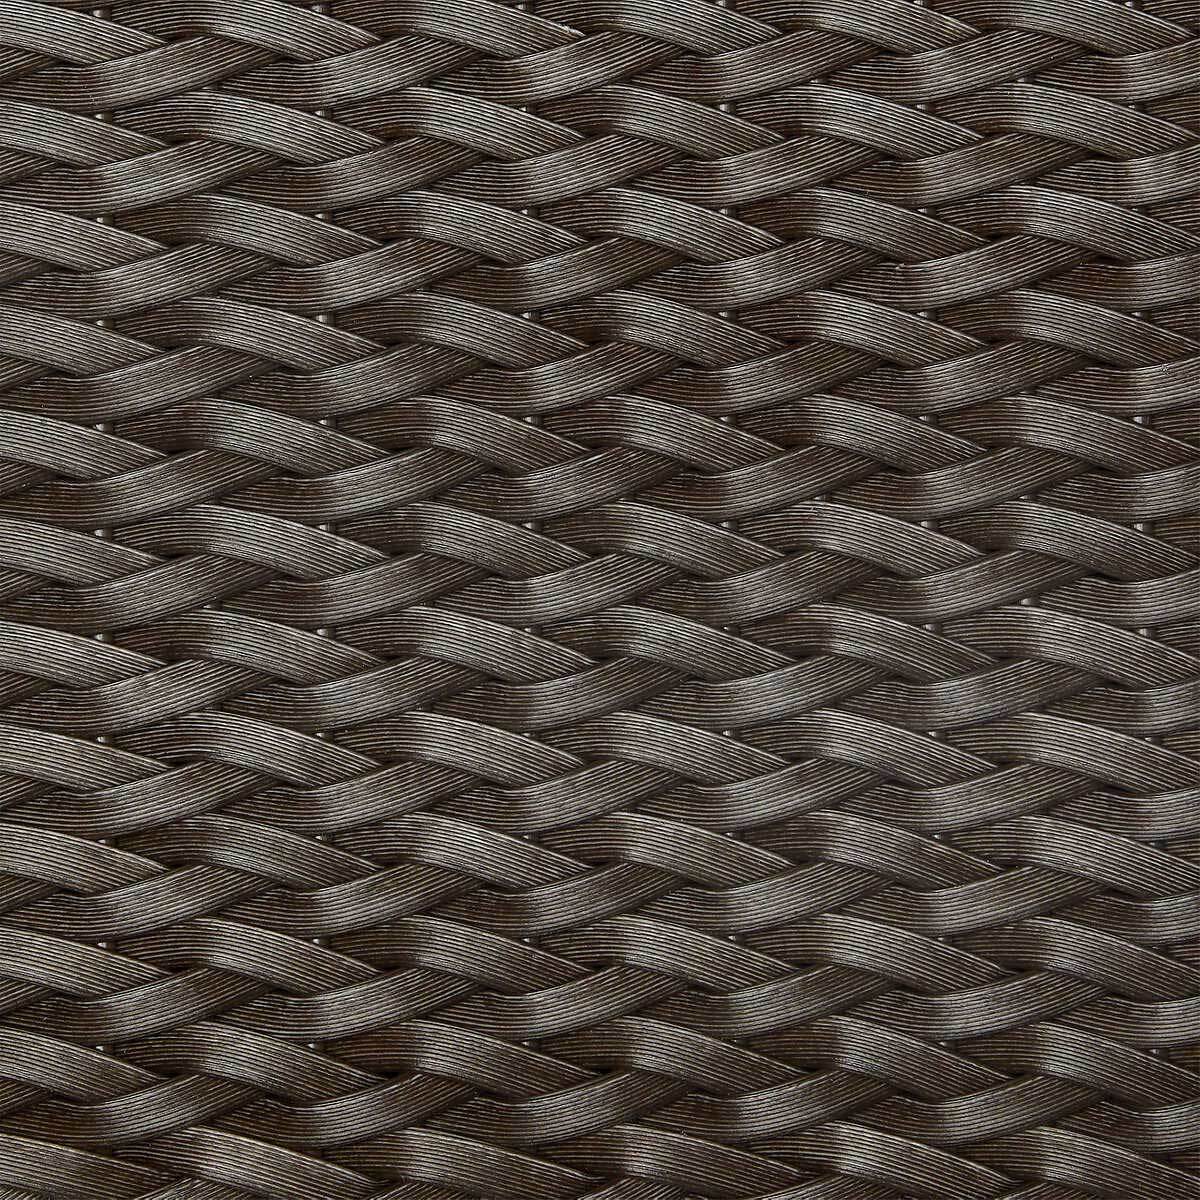 Wicker pattern close-up